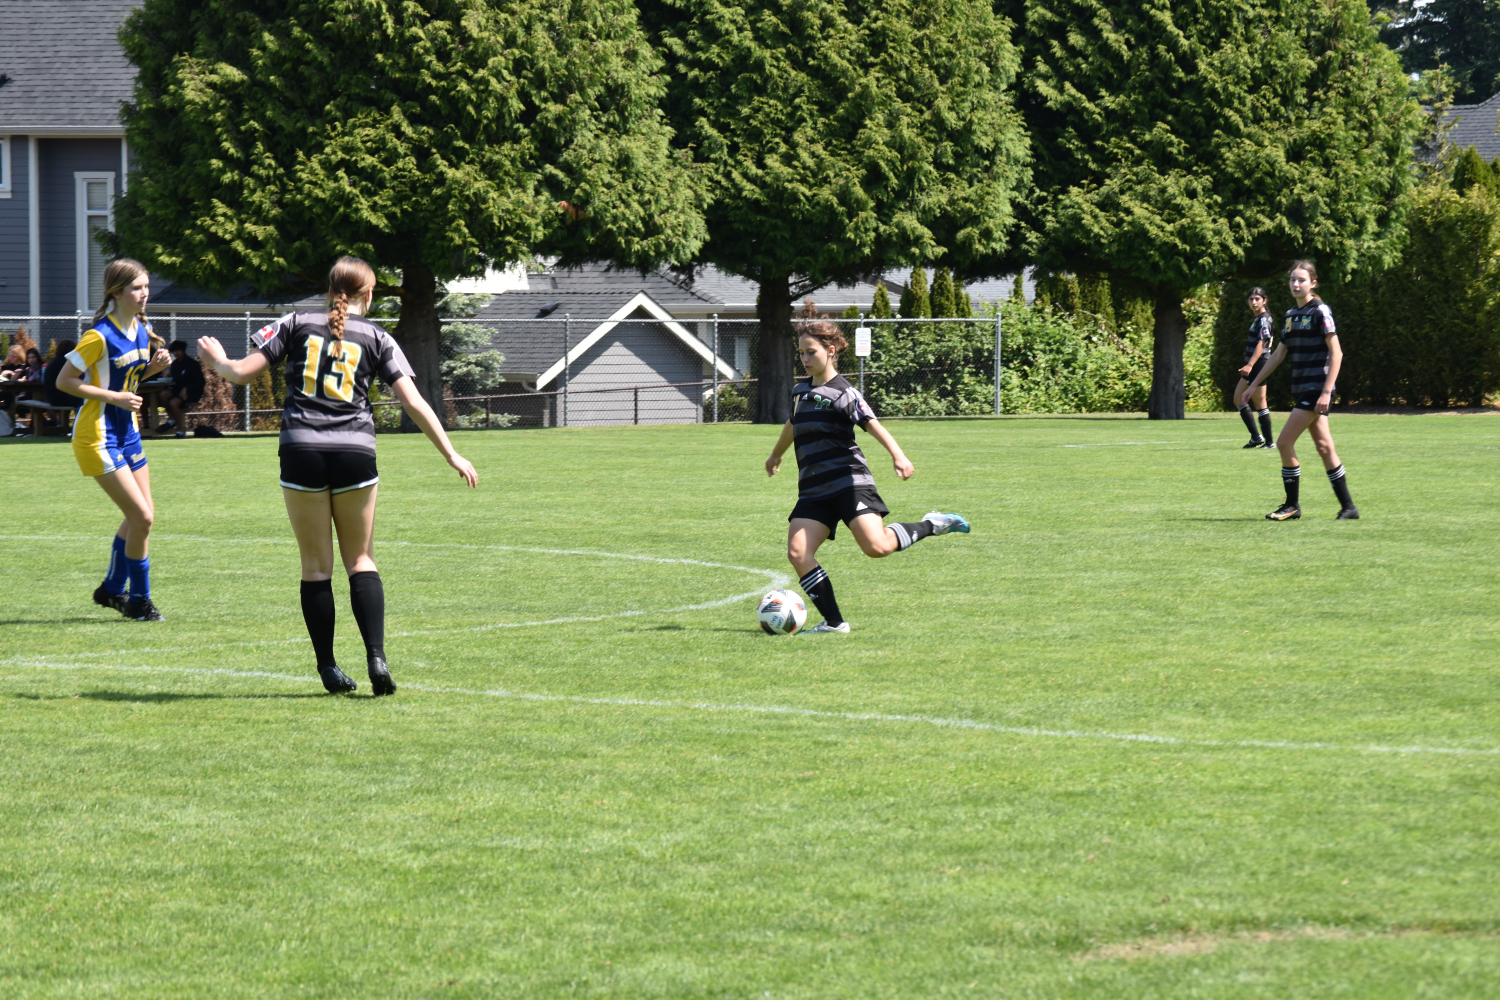 4 girls playing soccer